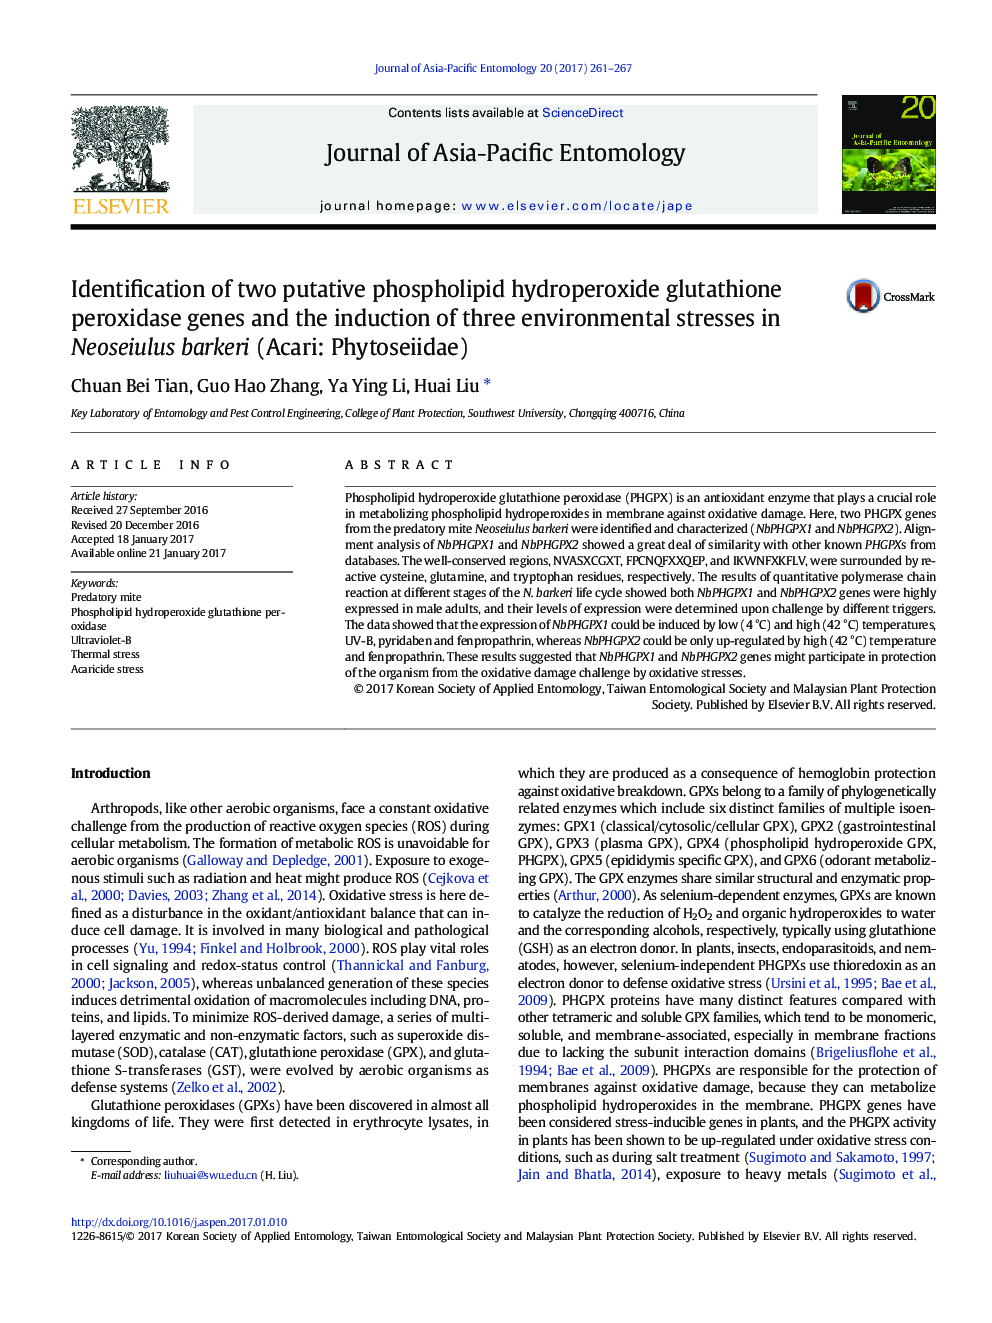 Identification of two putative phospholipid hydroperoxide glutathione peroxidase genes and the induction of three environmental stresses in Neoseiulus barkeri (Acari: Phytoseiidae)